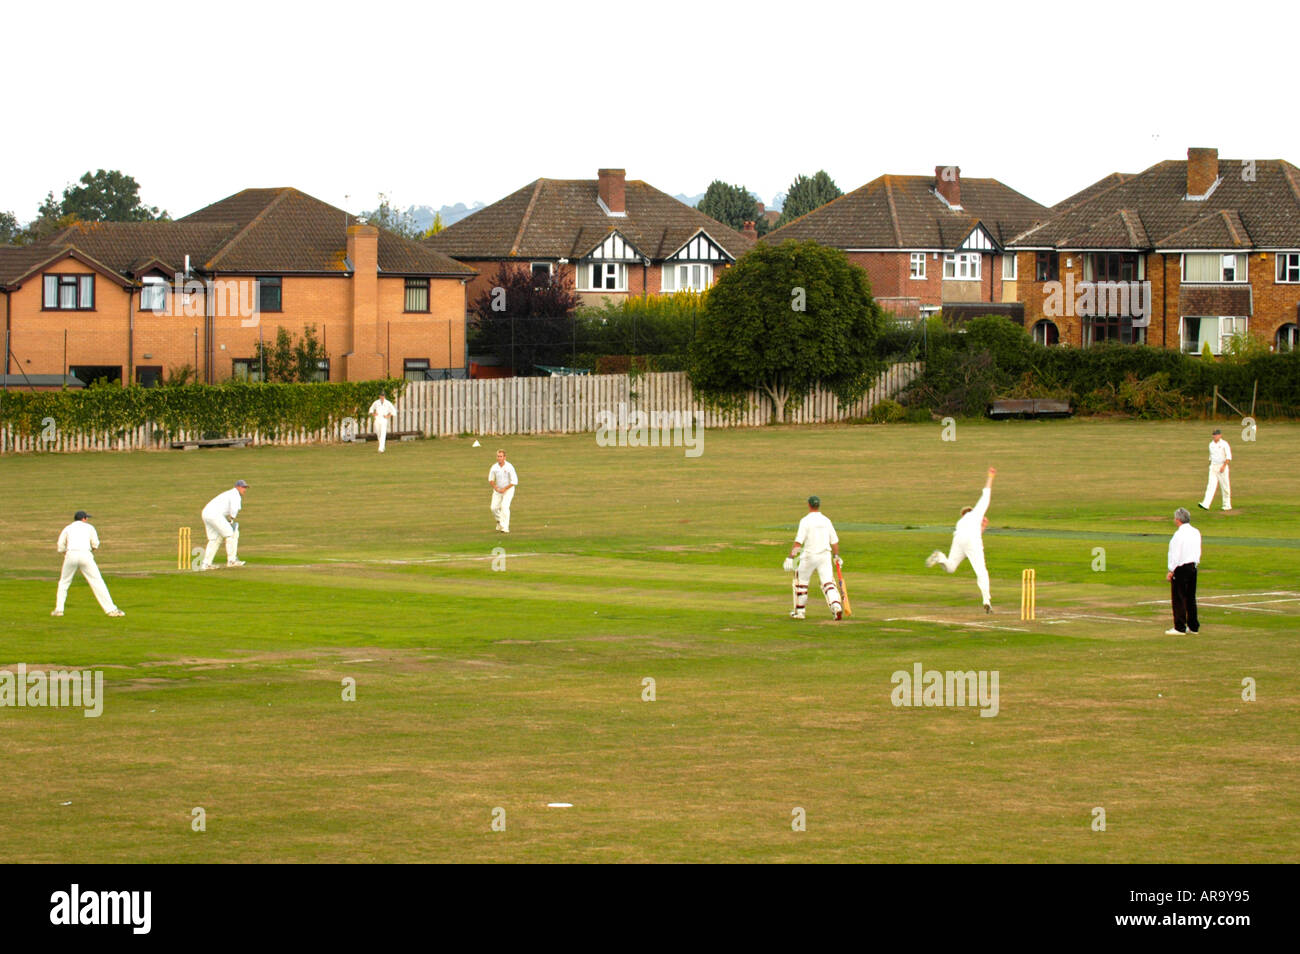 Game in progress at Keynsham Cricket Club village near Bristol England UK Stock Photo